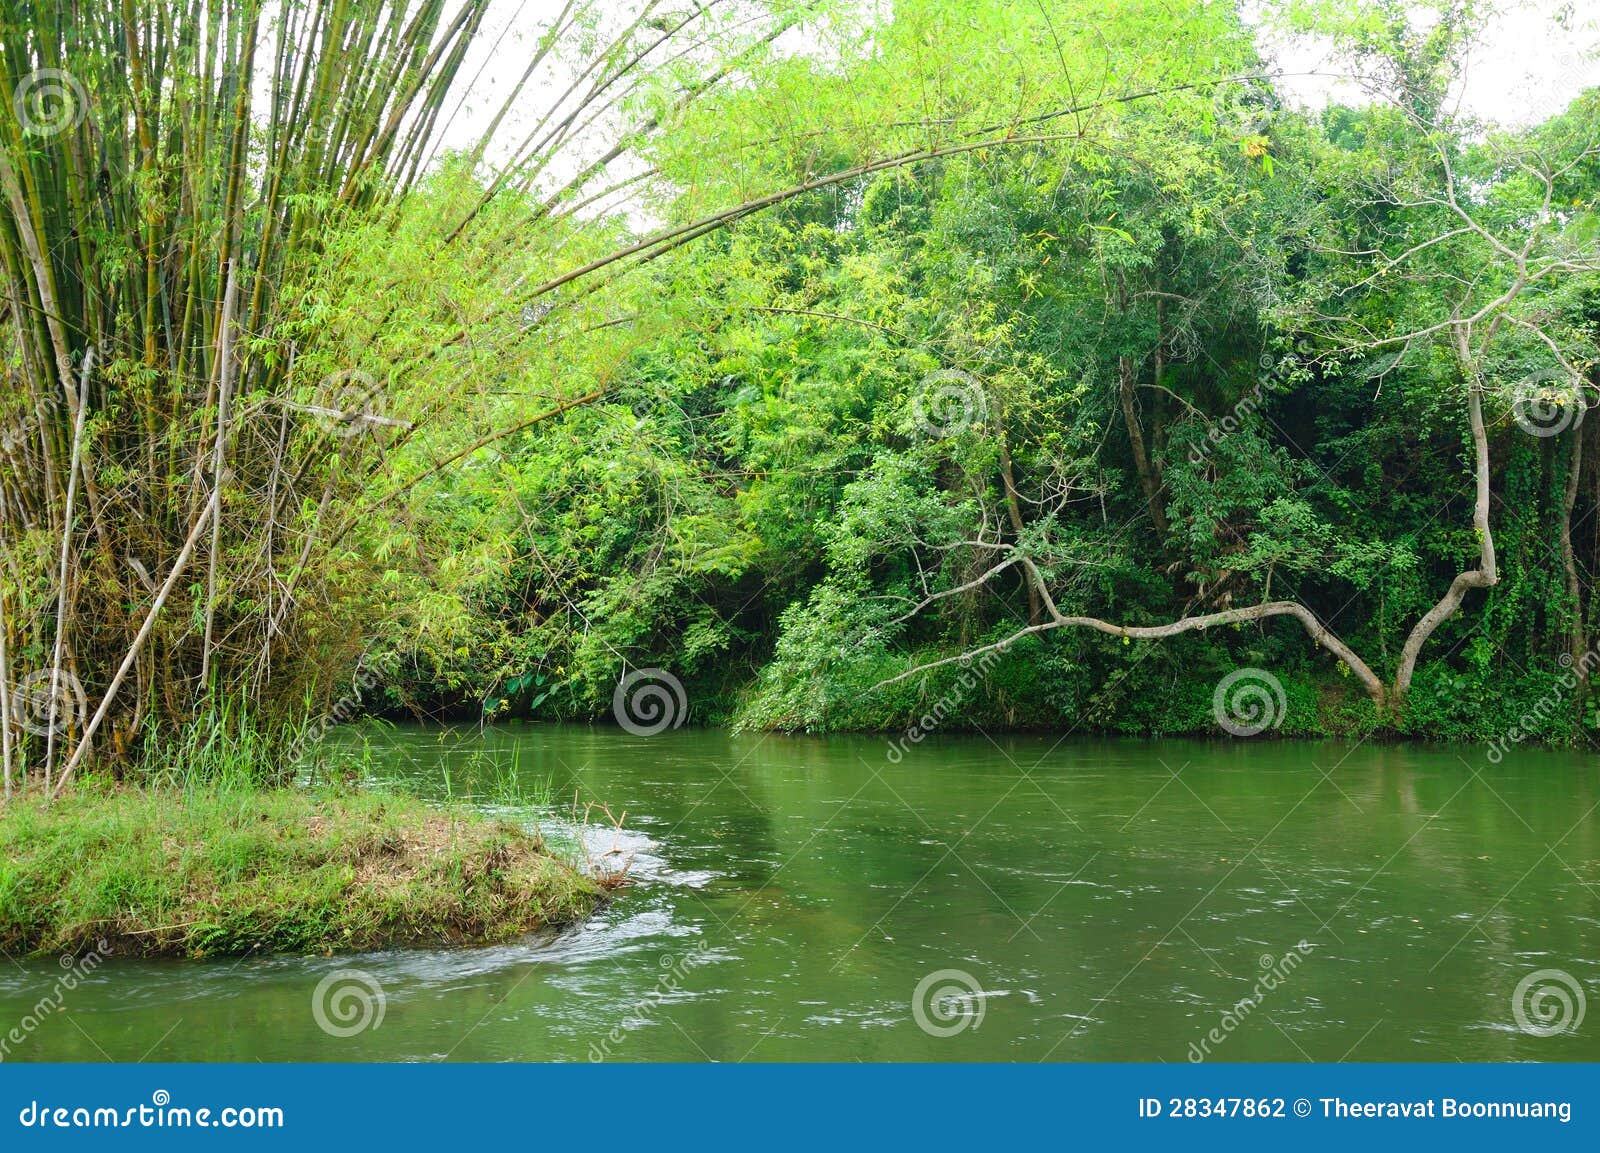 Jungle Scenery Stock Photography - Image: 28347862